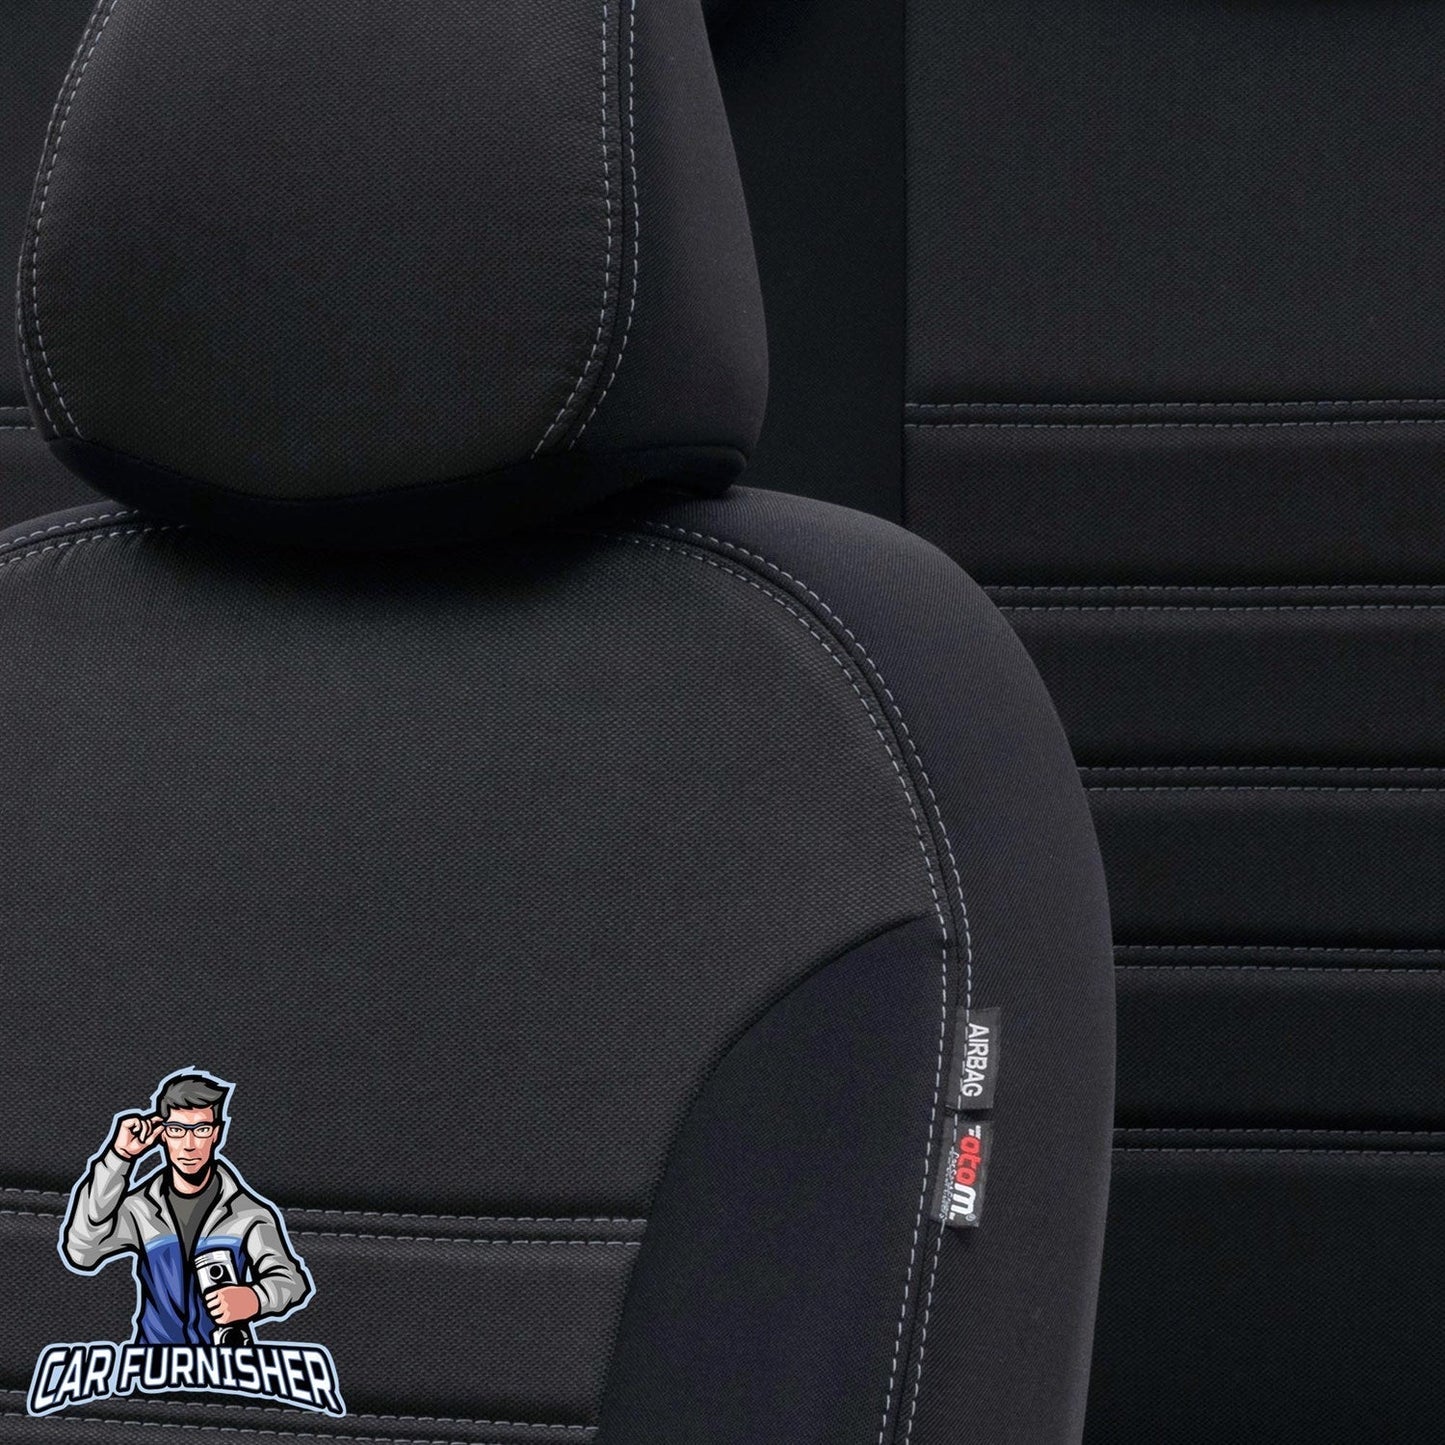 Opel Antara Seat Covers Original Jacquard Design Black Jacquard Fabric